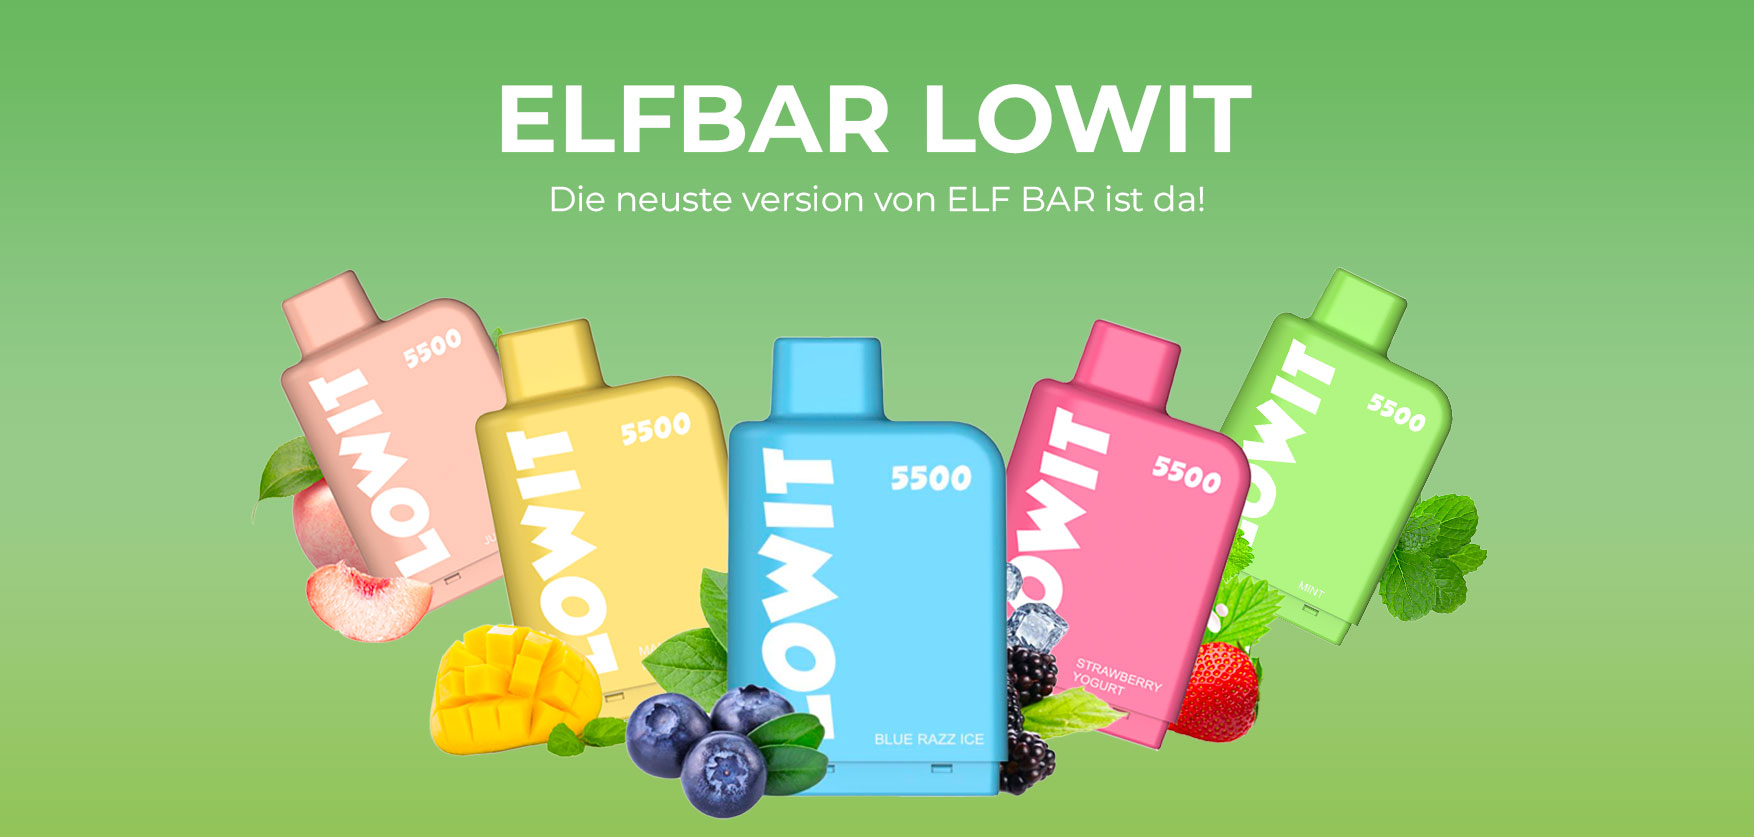 Elf Bar Lowit